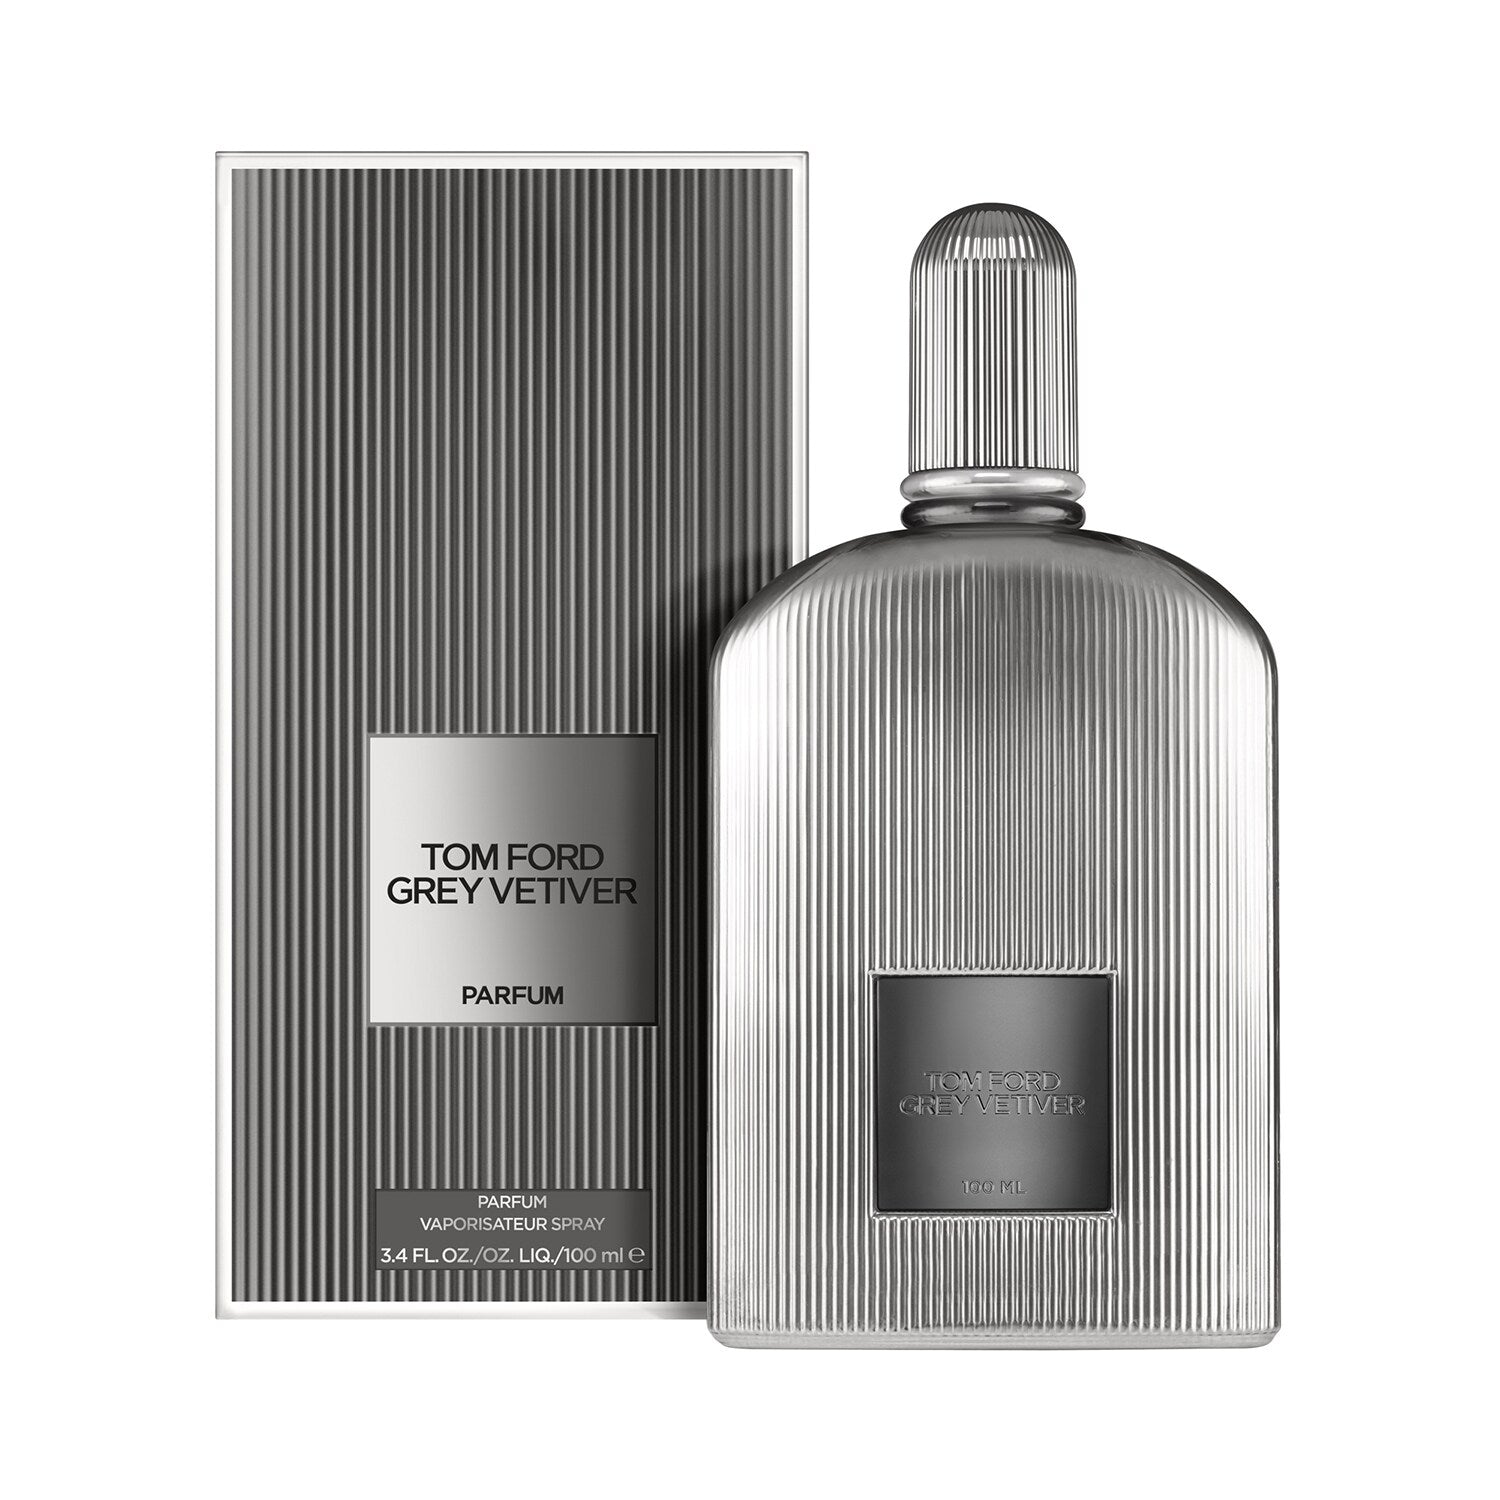 Tom Ford Grey Vetiver Parfum | My Perfume Shop Australia